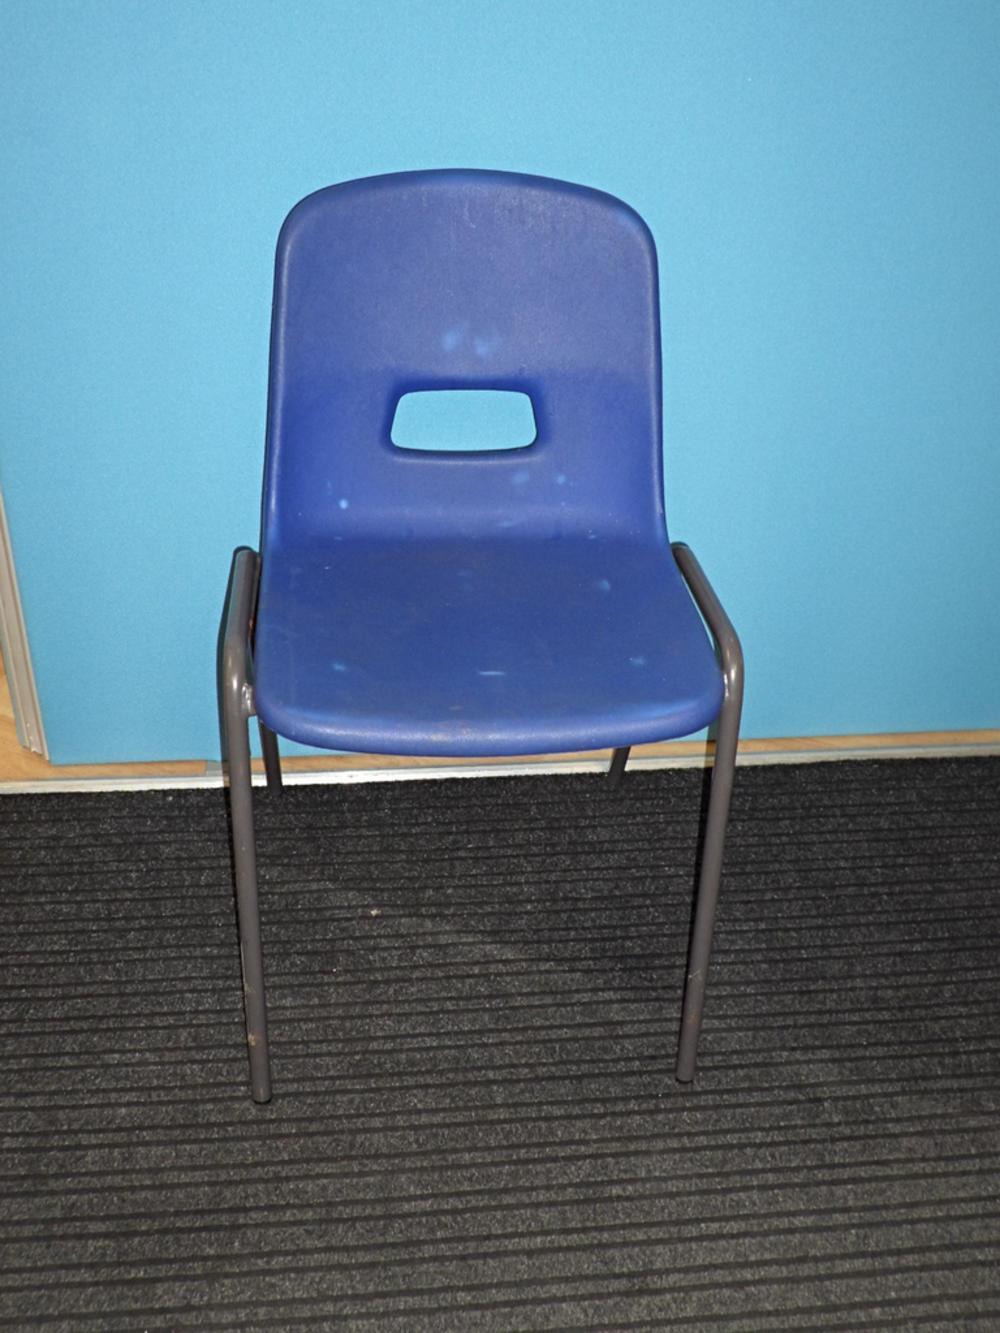 Stacking Blue Polypropylene Chair